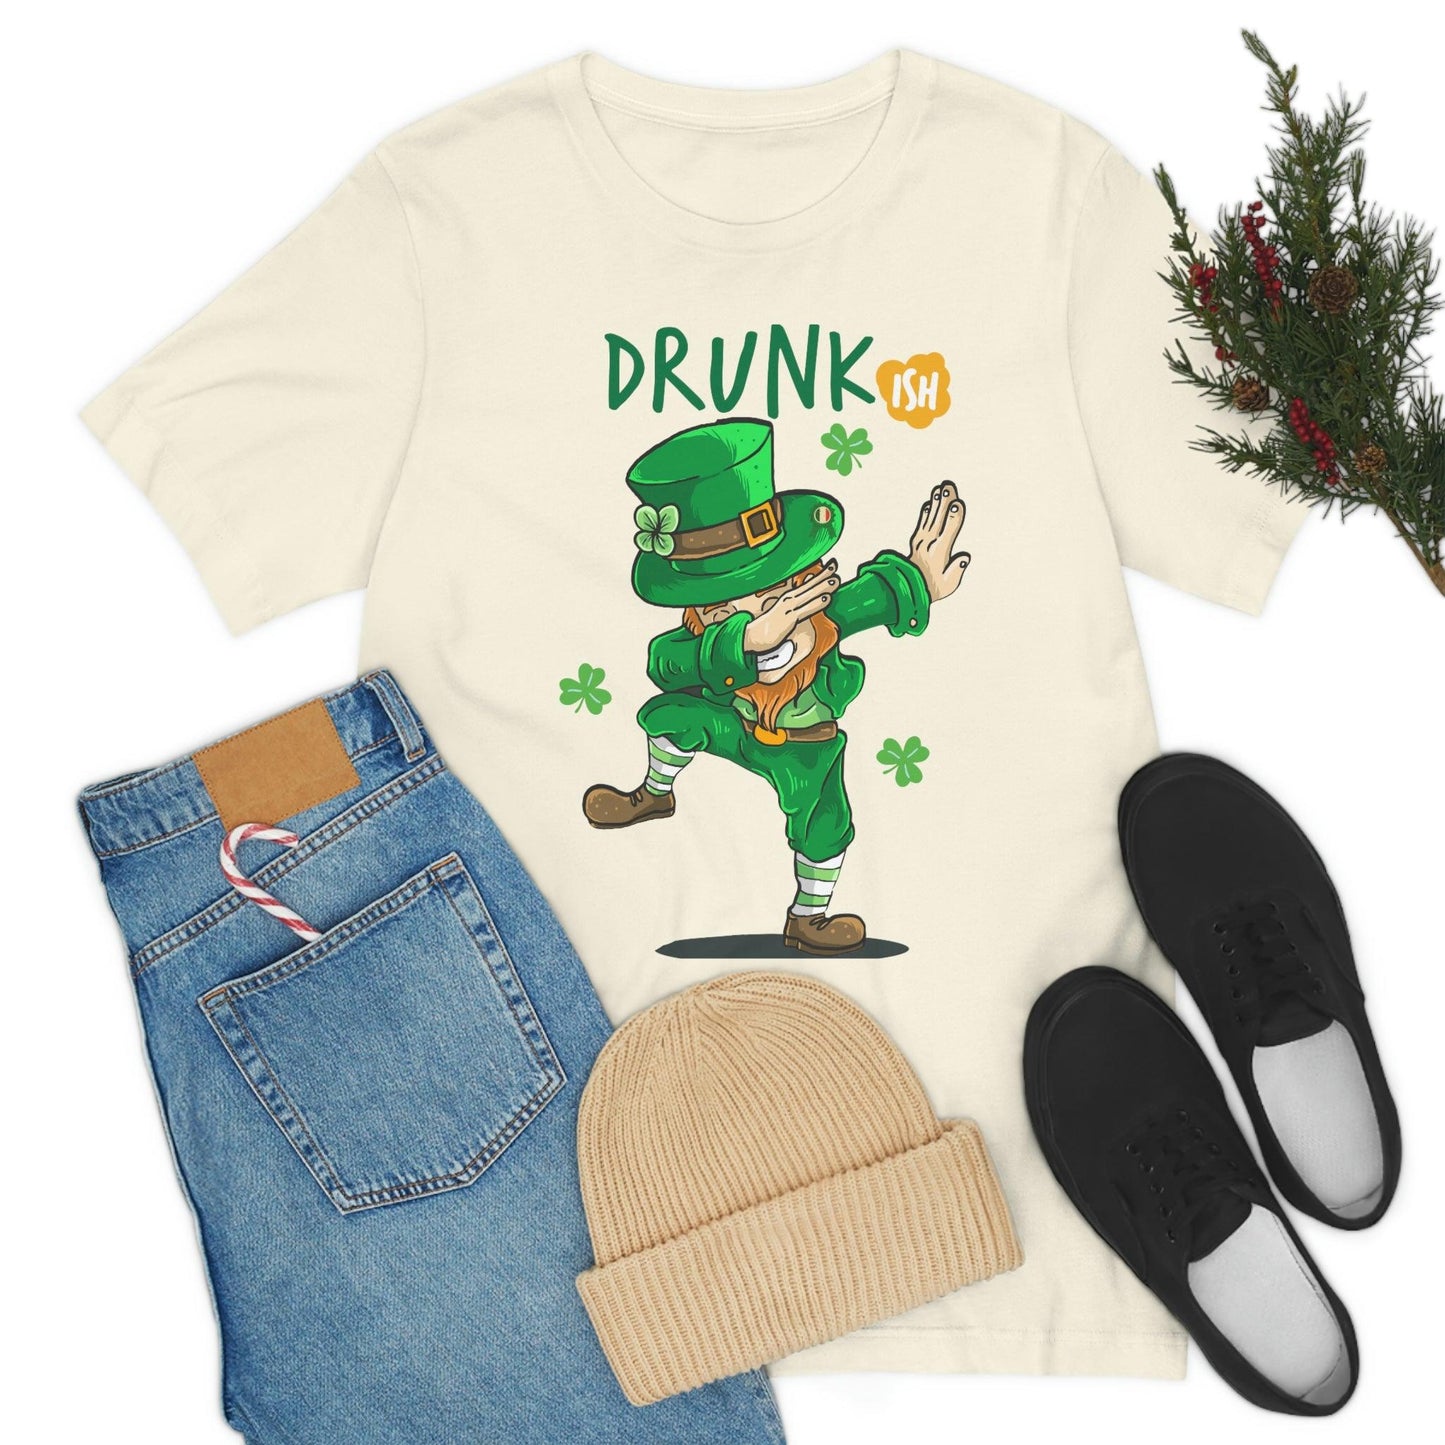 Day drinking shirt Drunk ish St Patricks day Irish shirt saint Patricks day - St Patrick shirt Funny St Patricks shirt saint patrick,